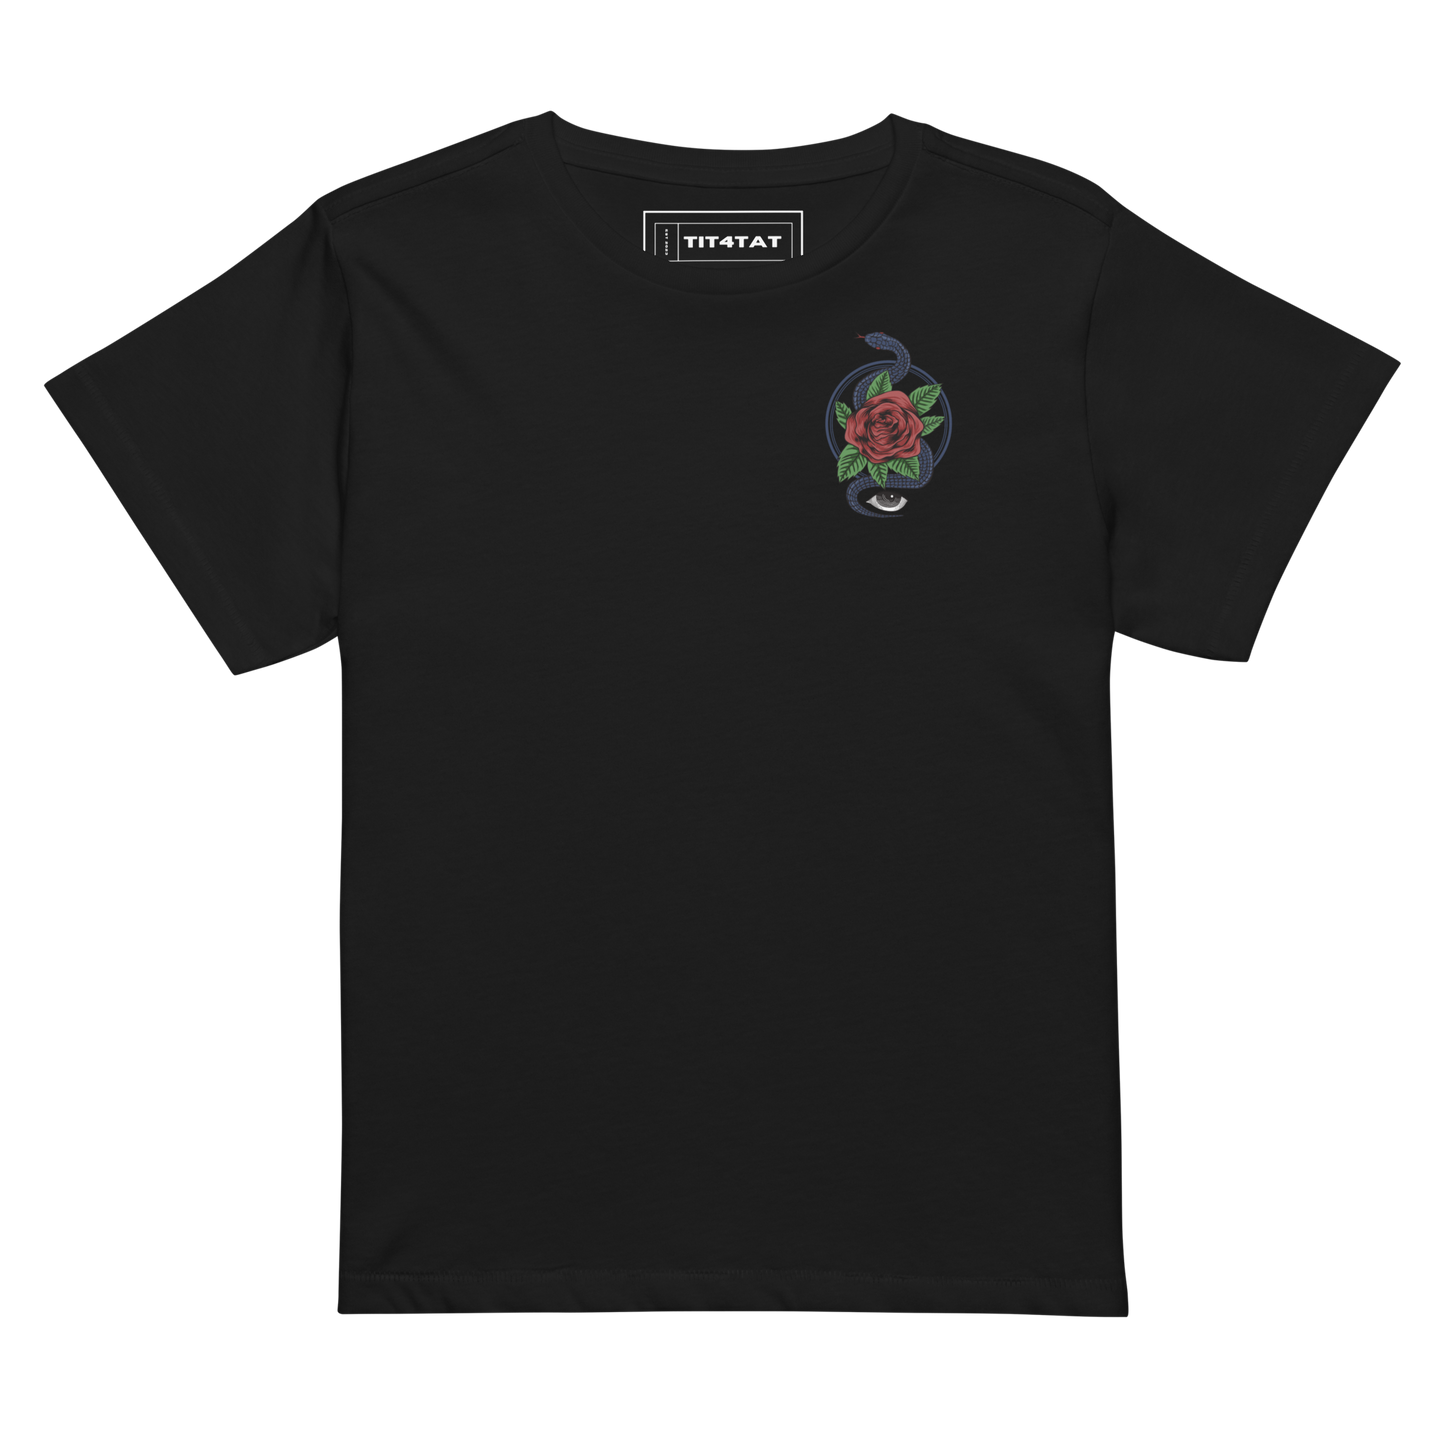 Tit4Tat - Camiseta Mujer Talle Alto "Malevolent Rose"